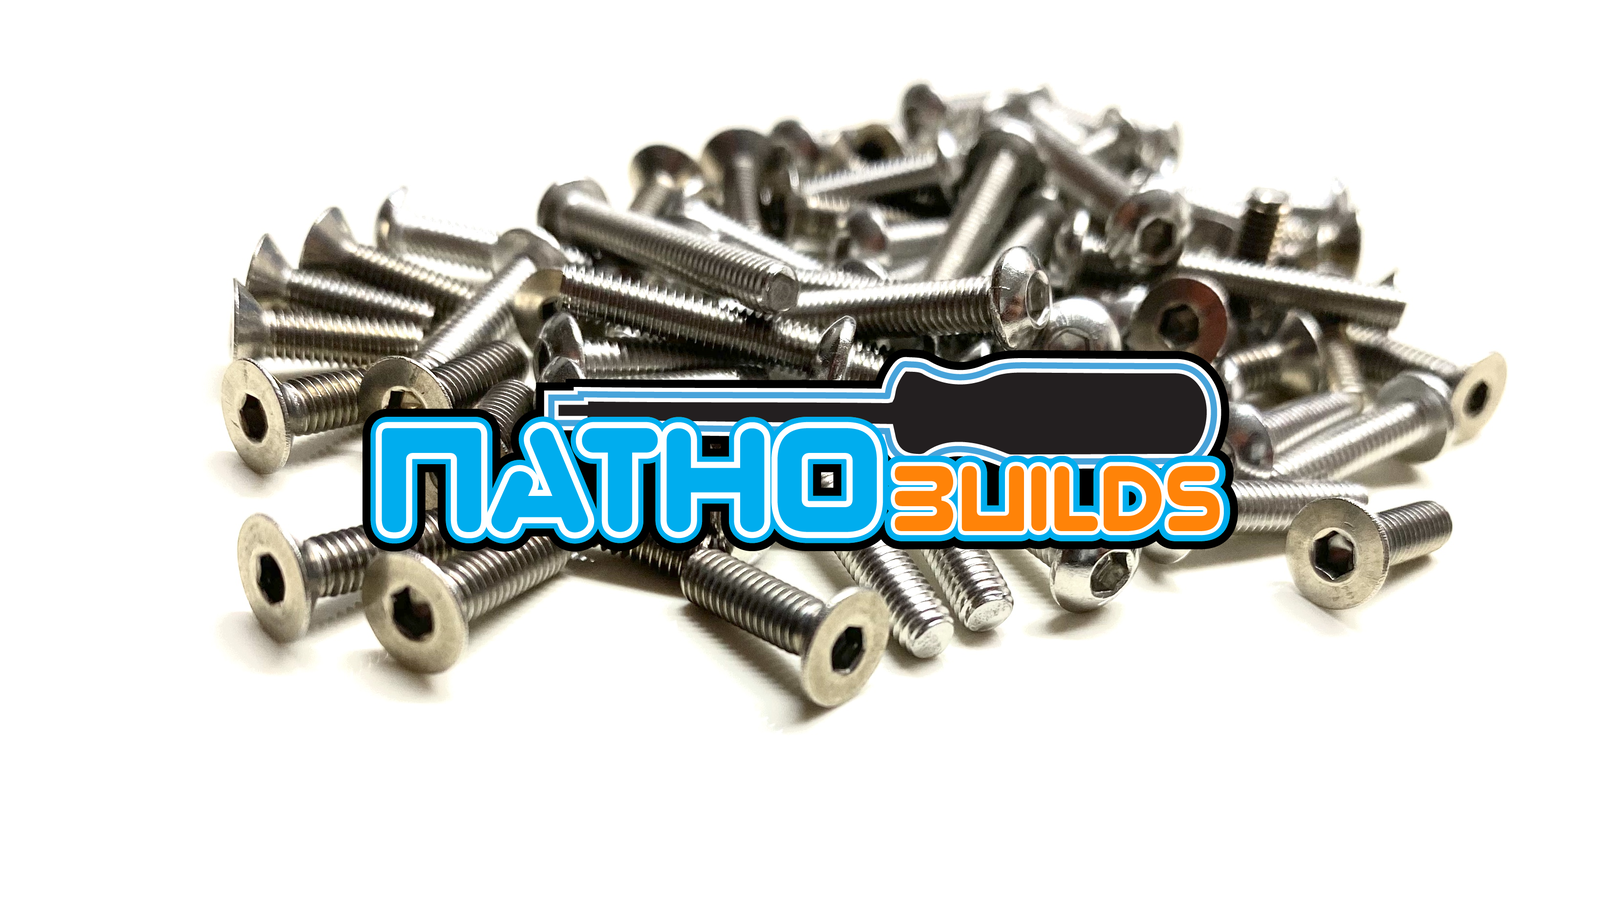 NathoBuilds: Stainless Steel Screw Kits for 1/8th - XRay XB8 2020